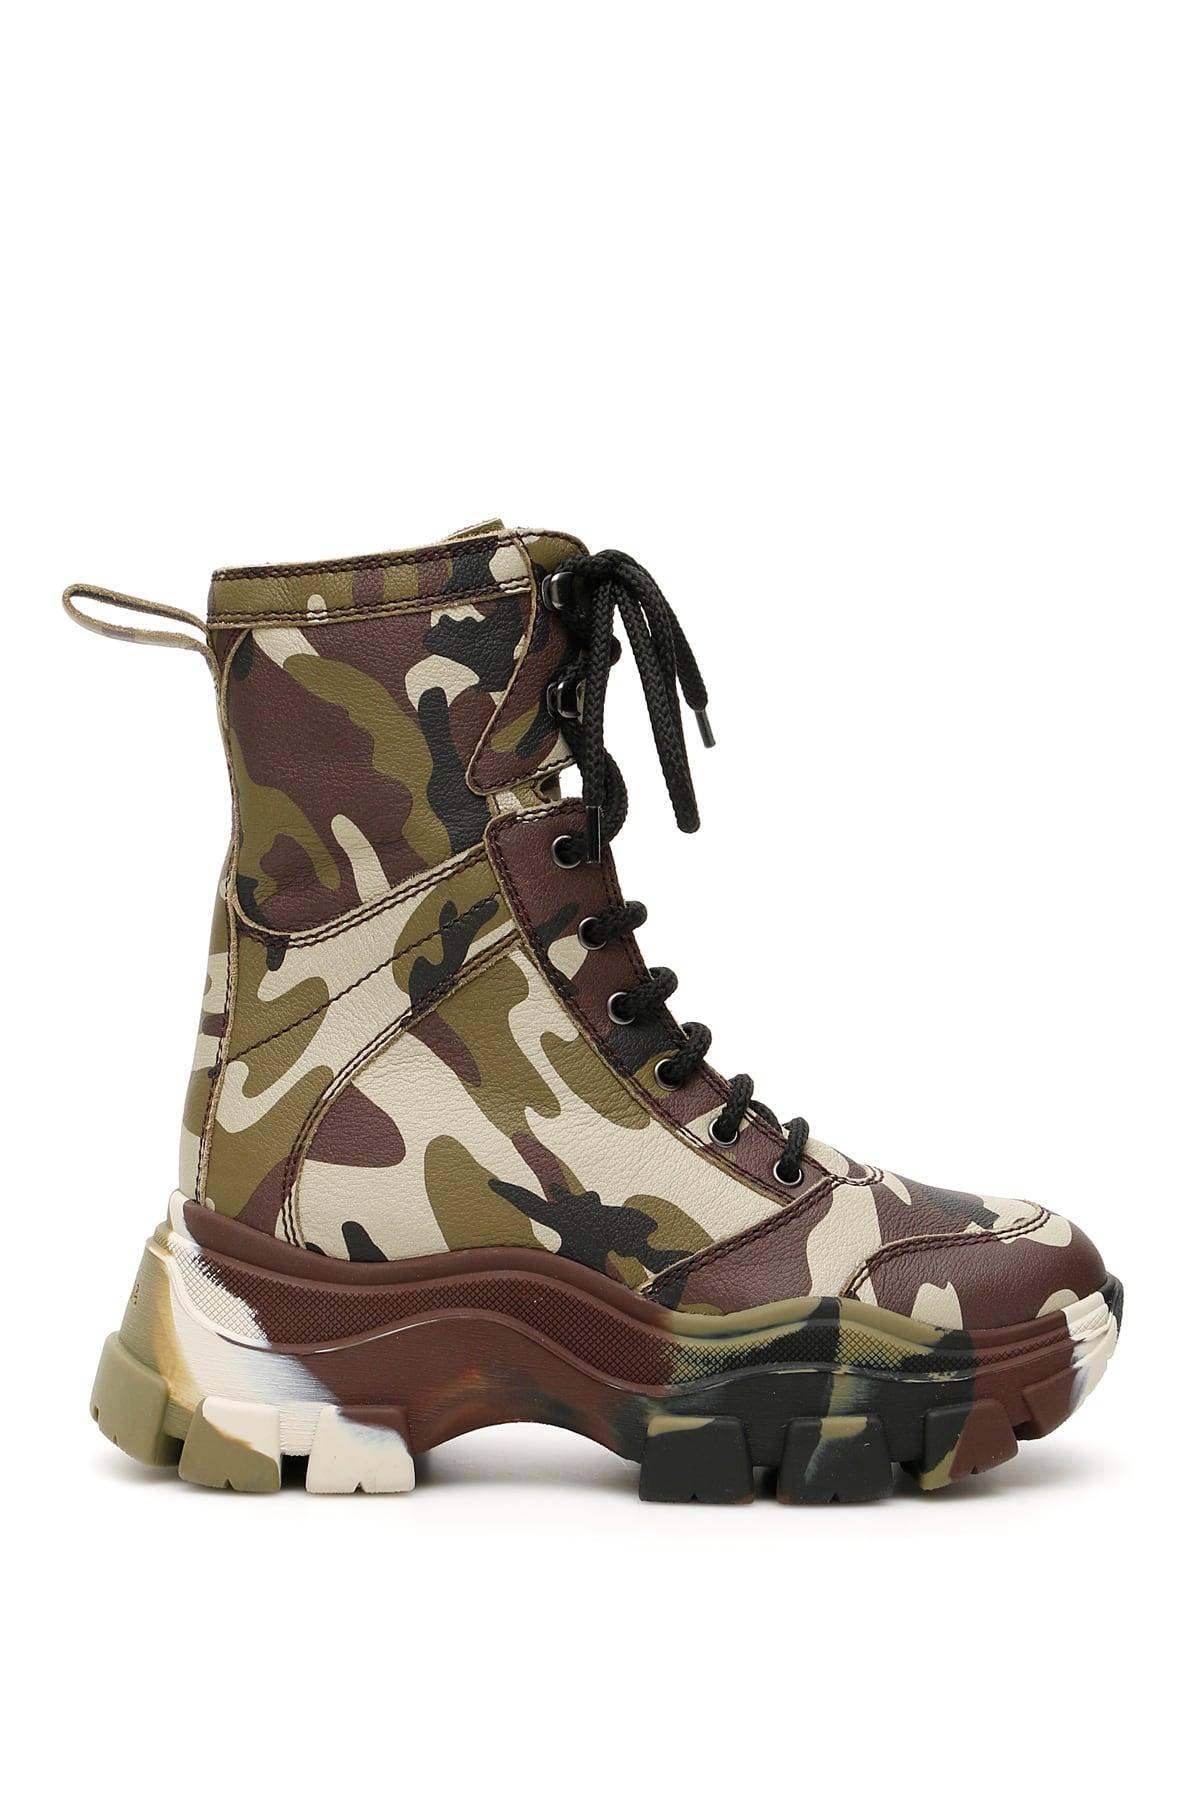 Prada Camouflage Combat Boots in Green